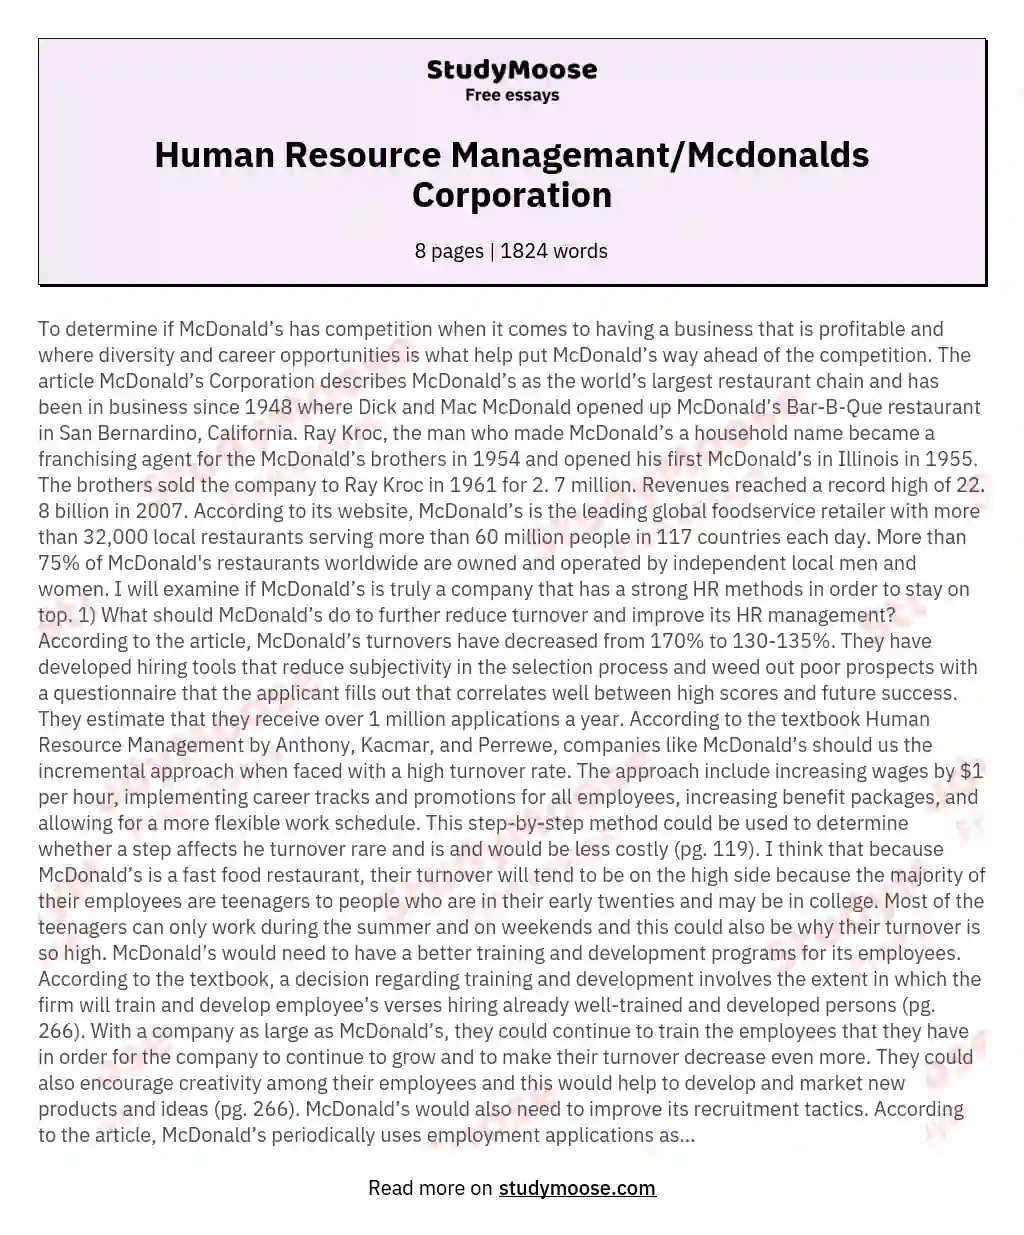 Human Resource Managemant/Mcdonalds Corporation essay